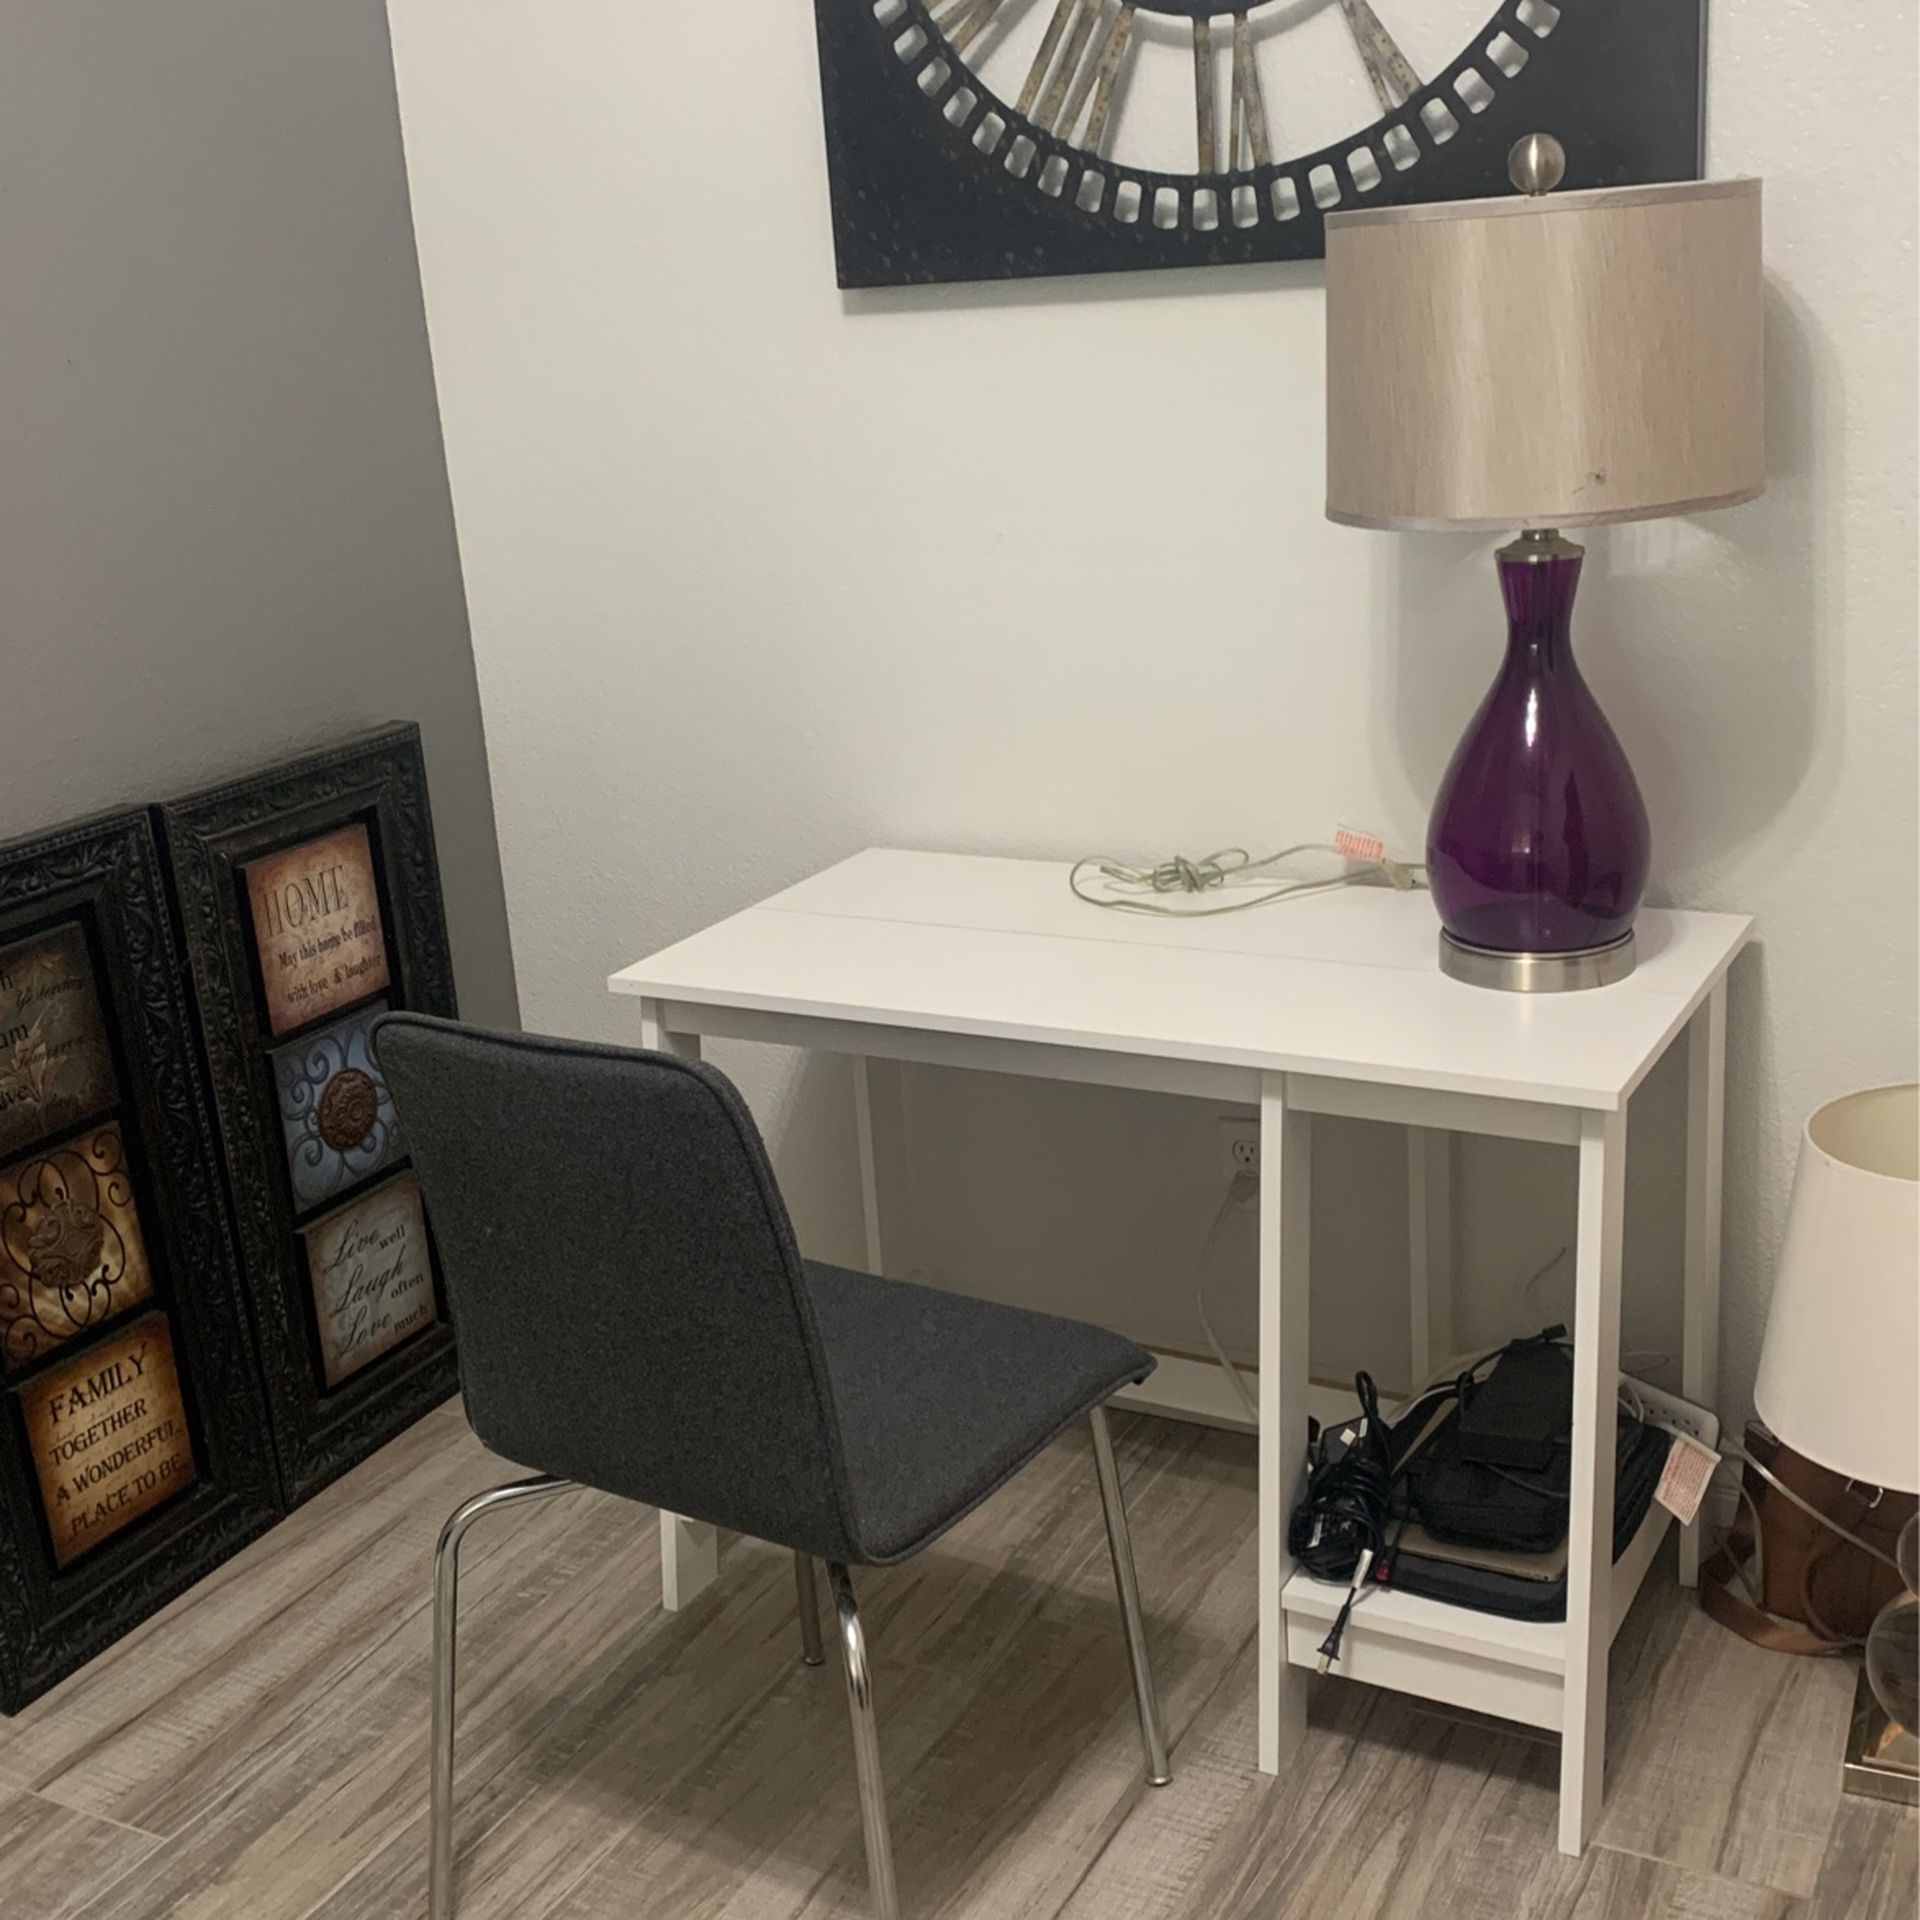 Desk+Lamp+Chair